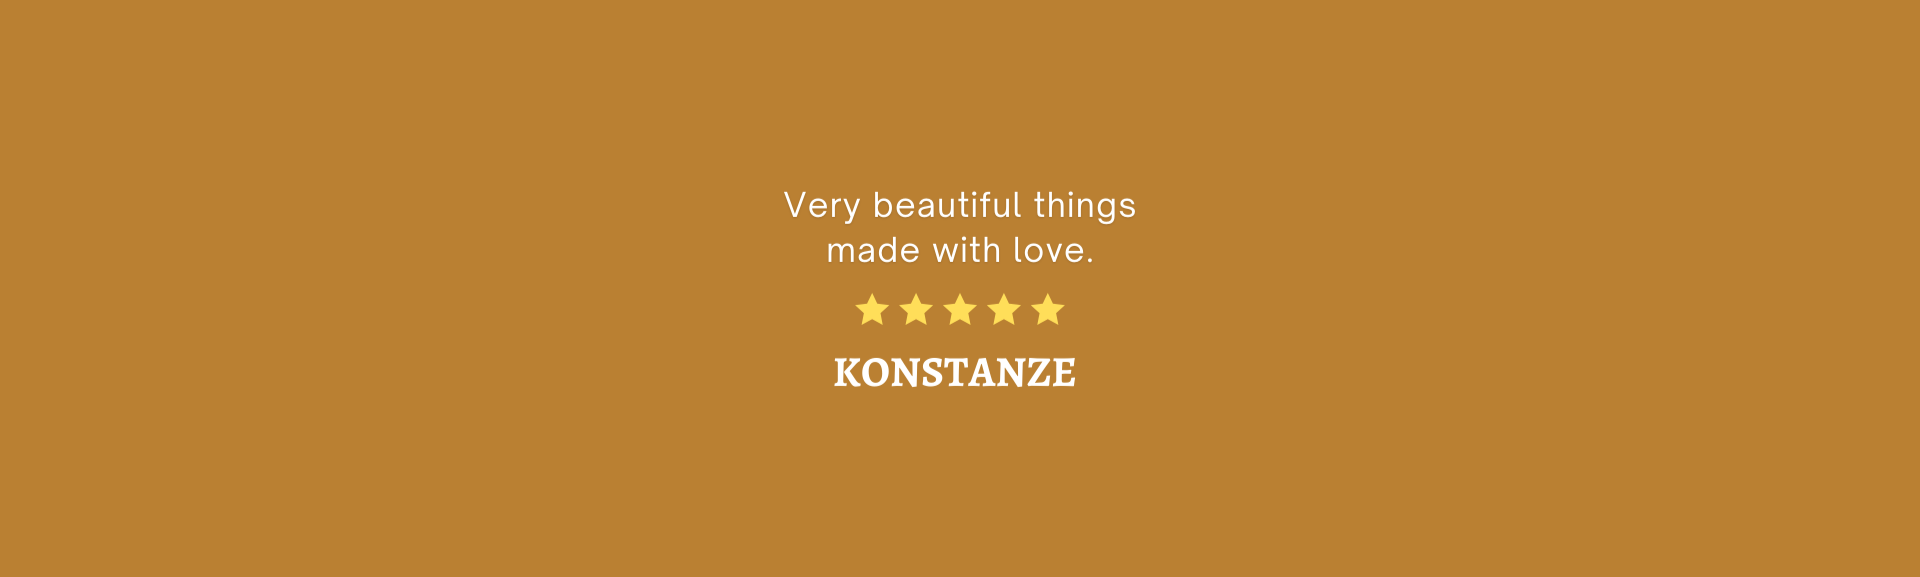 Review Konstanze